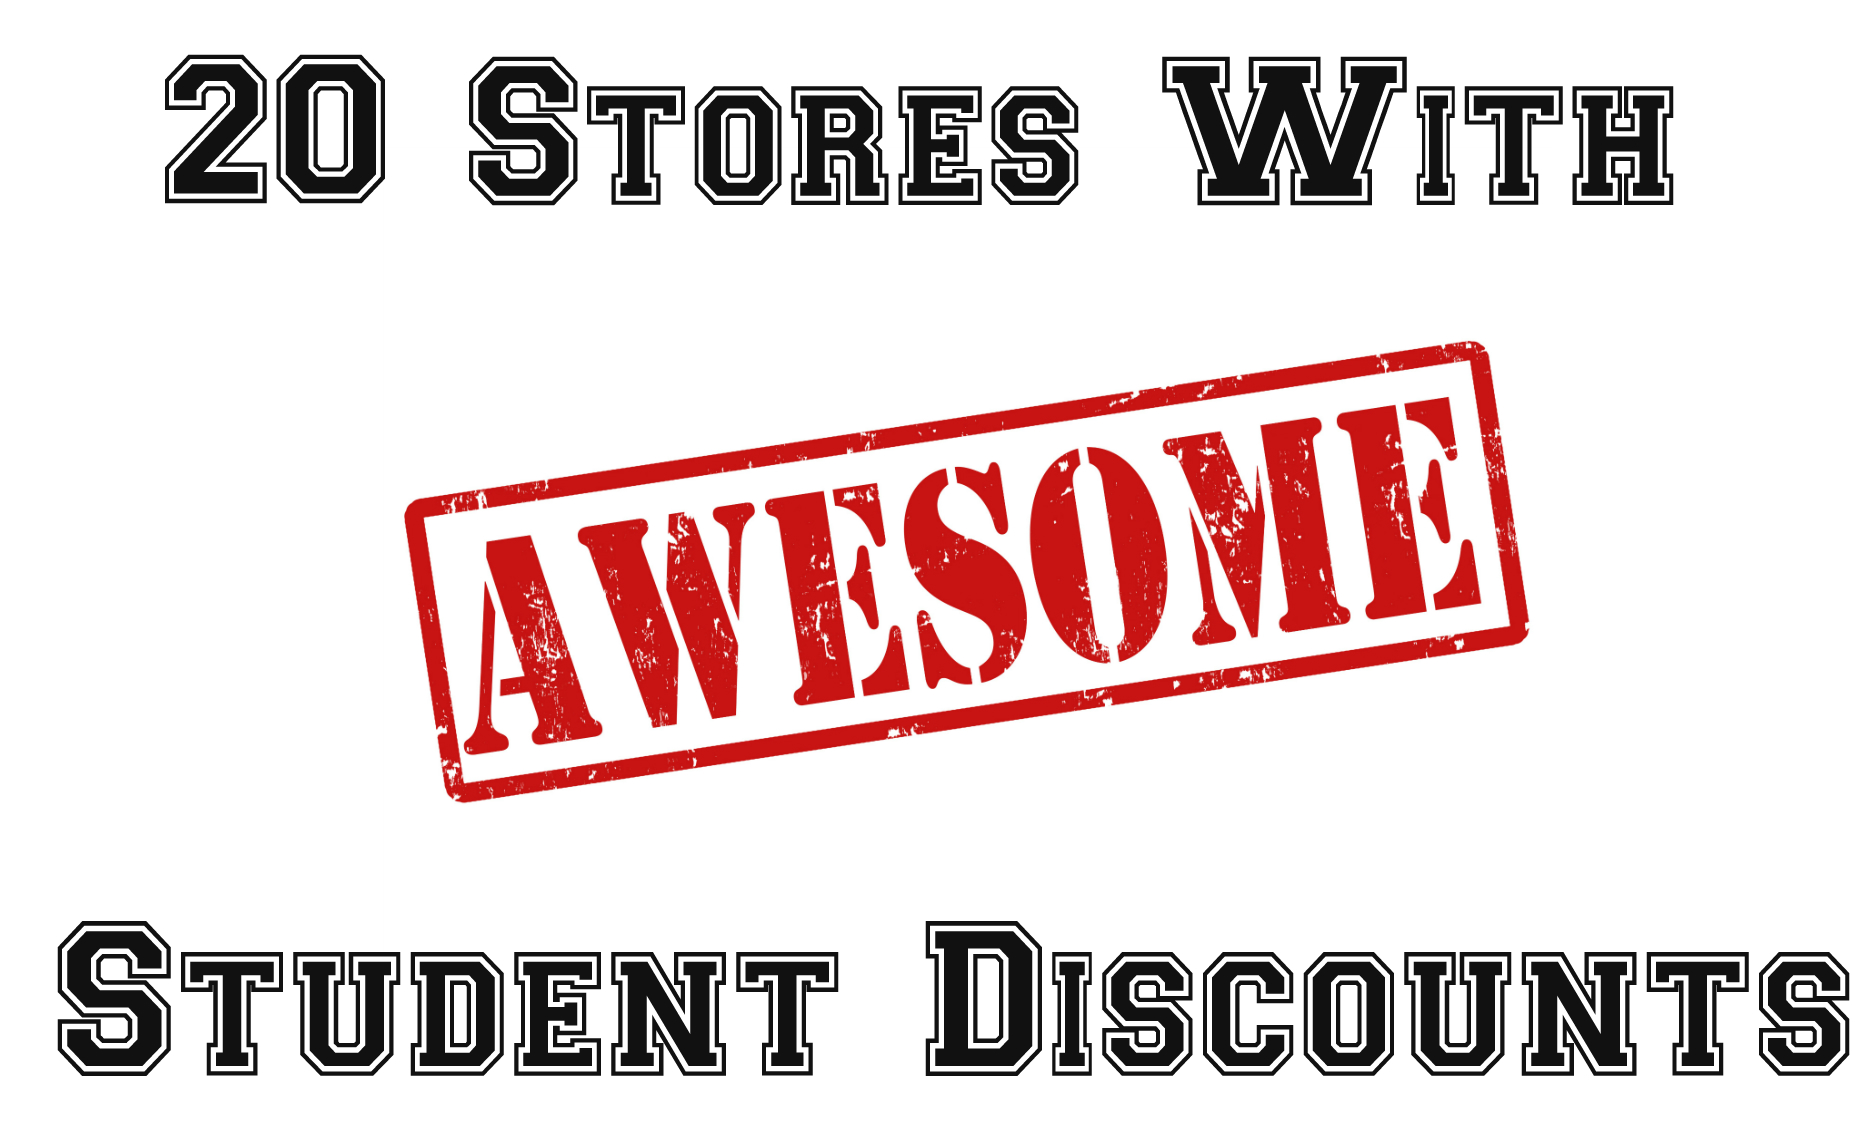 best student discounts, hidden student discounts, stores with student discounts